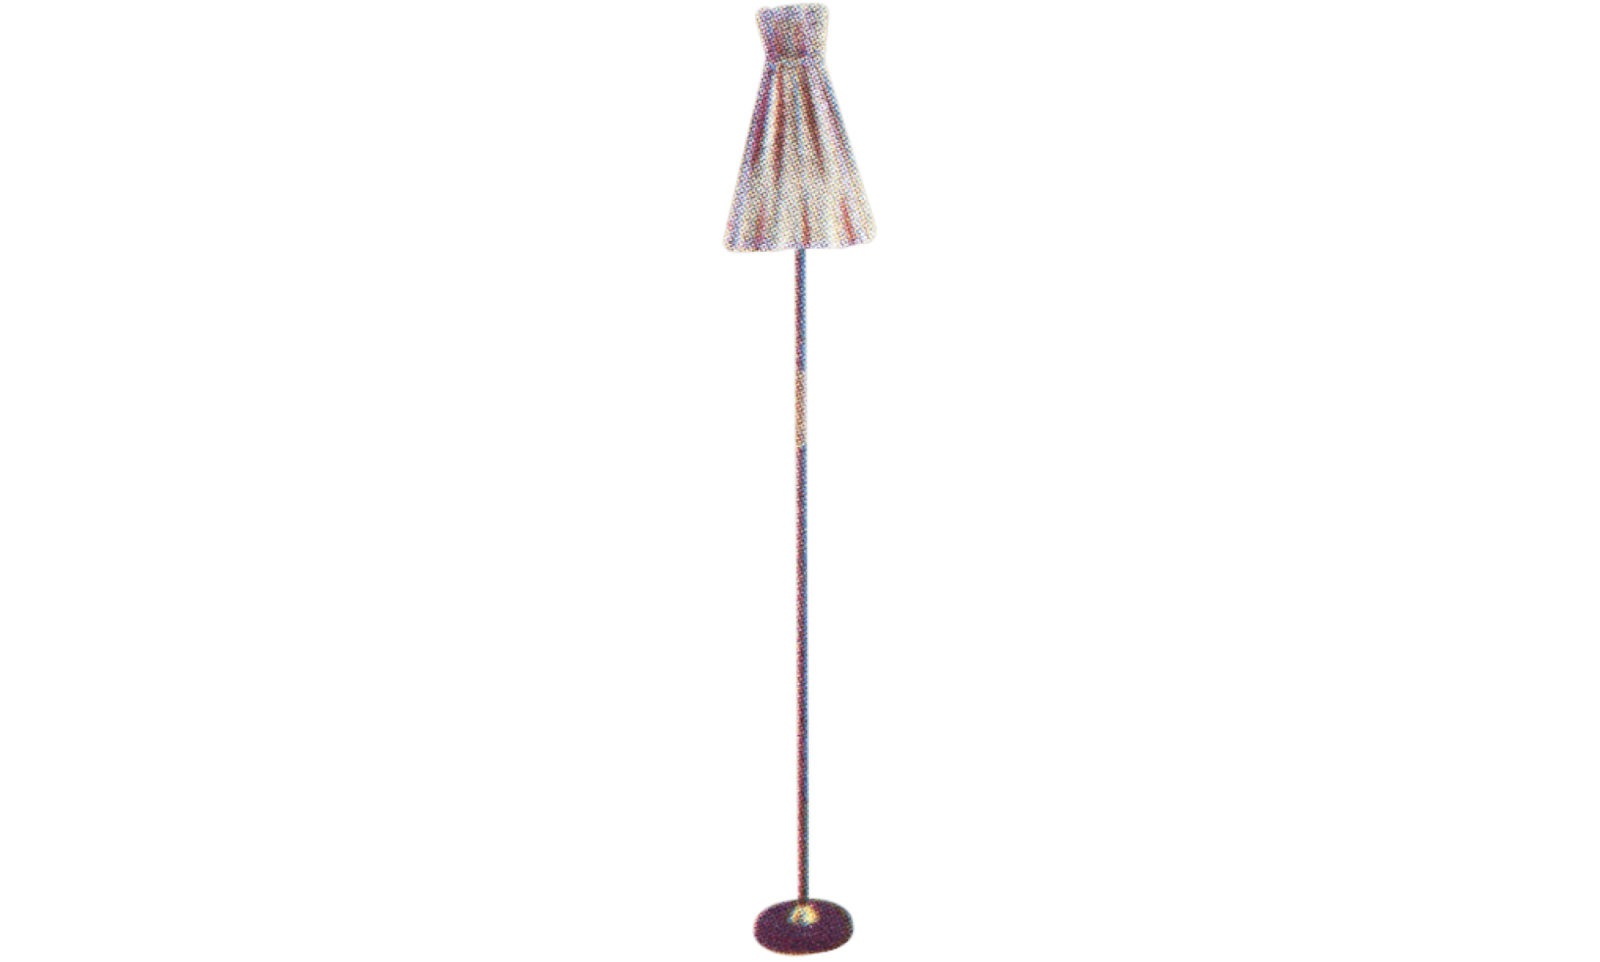 Floor lamp with fabric shade in 1950s pattern, IKEA KLOCKETT.